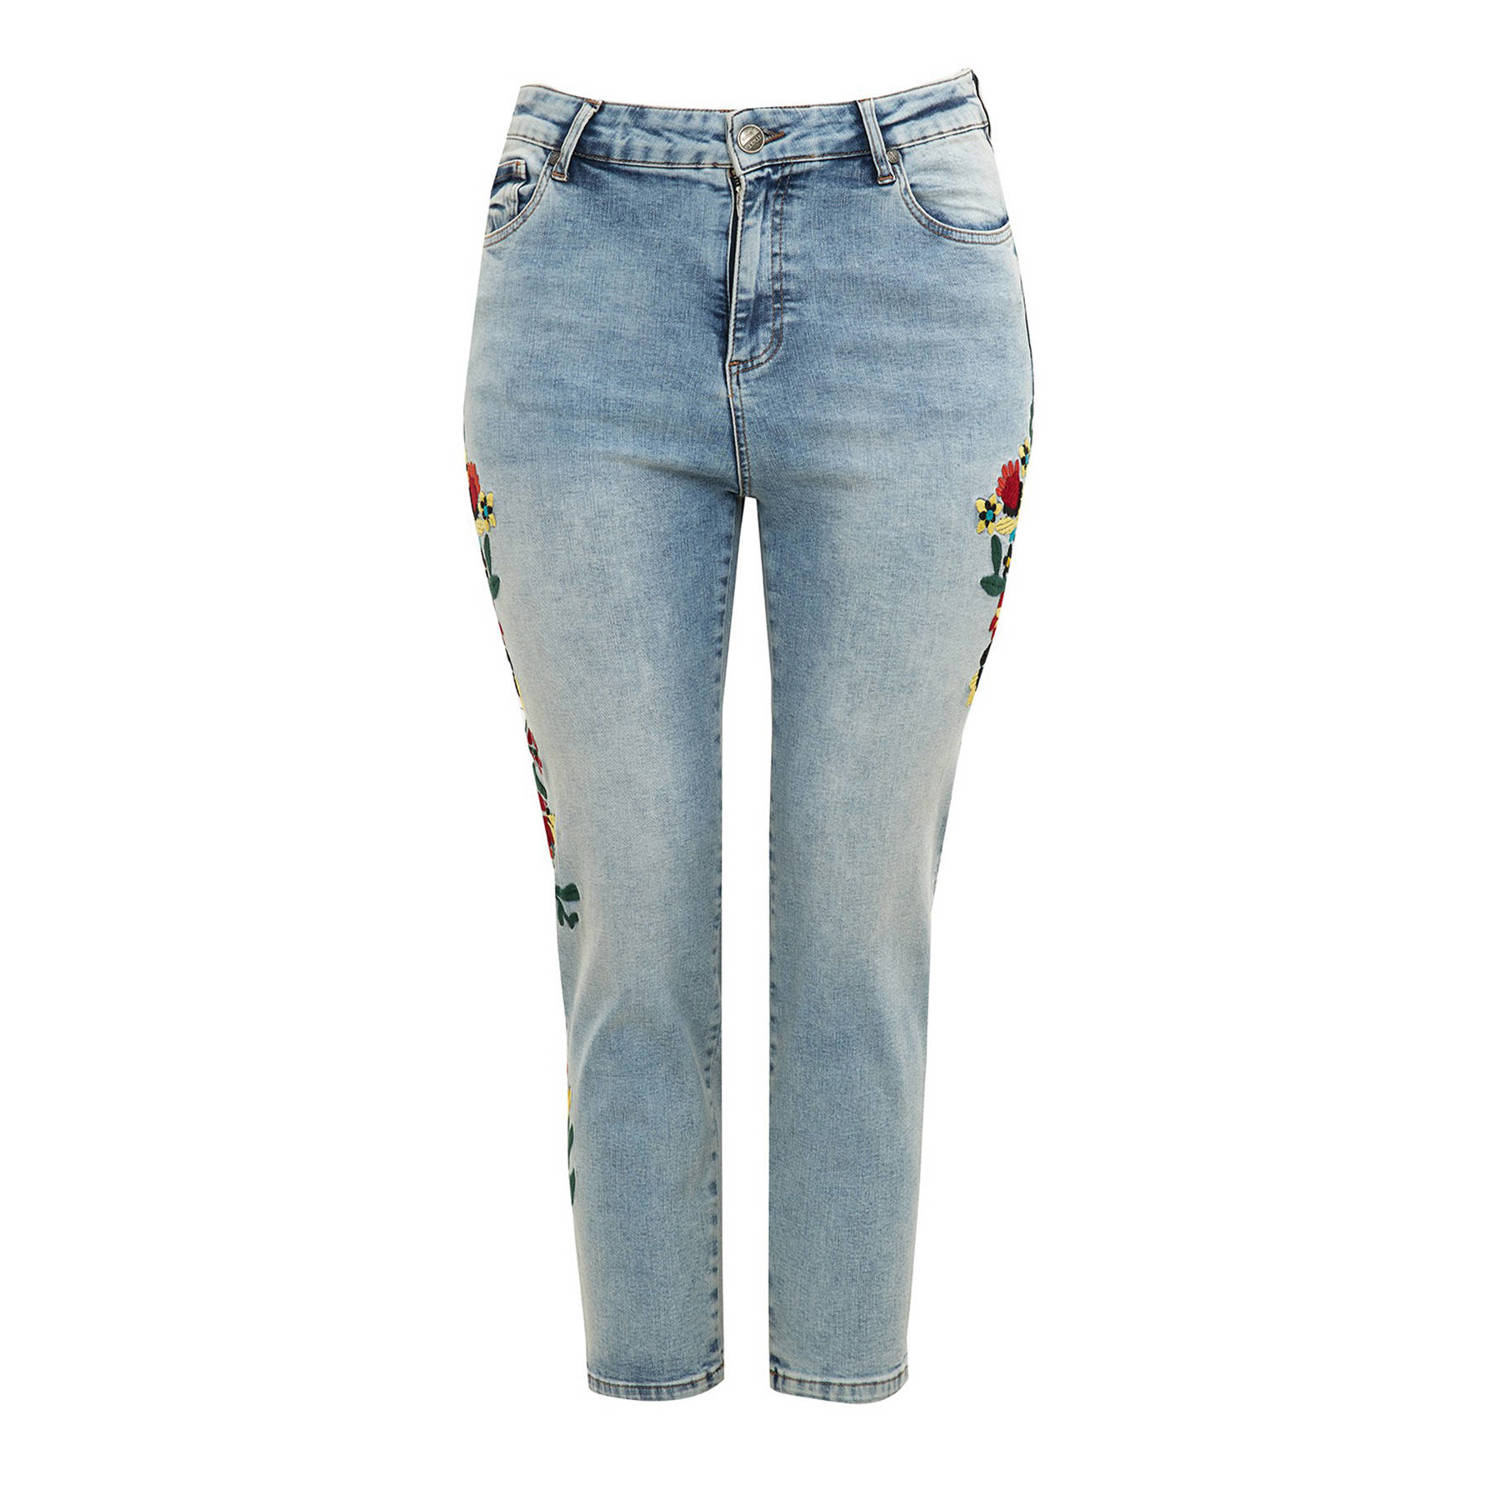 Mat Fashion slim fit jeans light blue denim